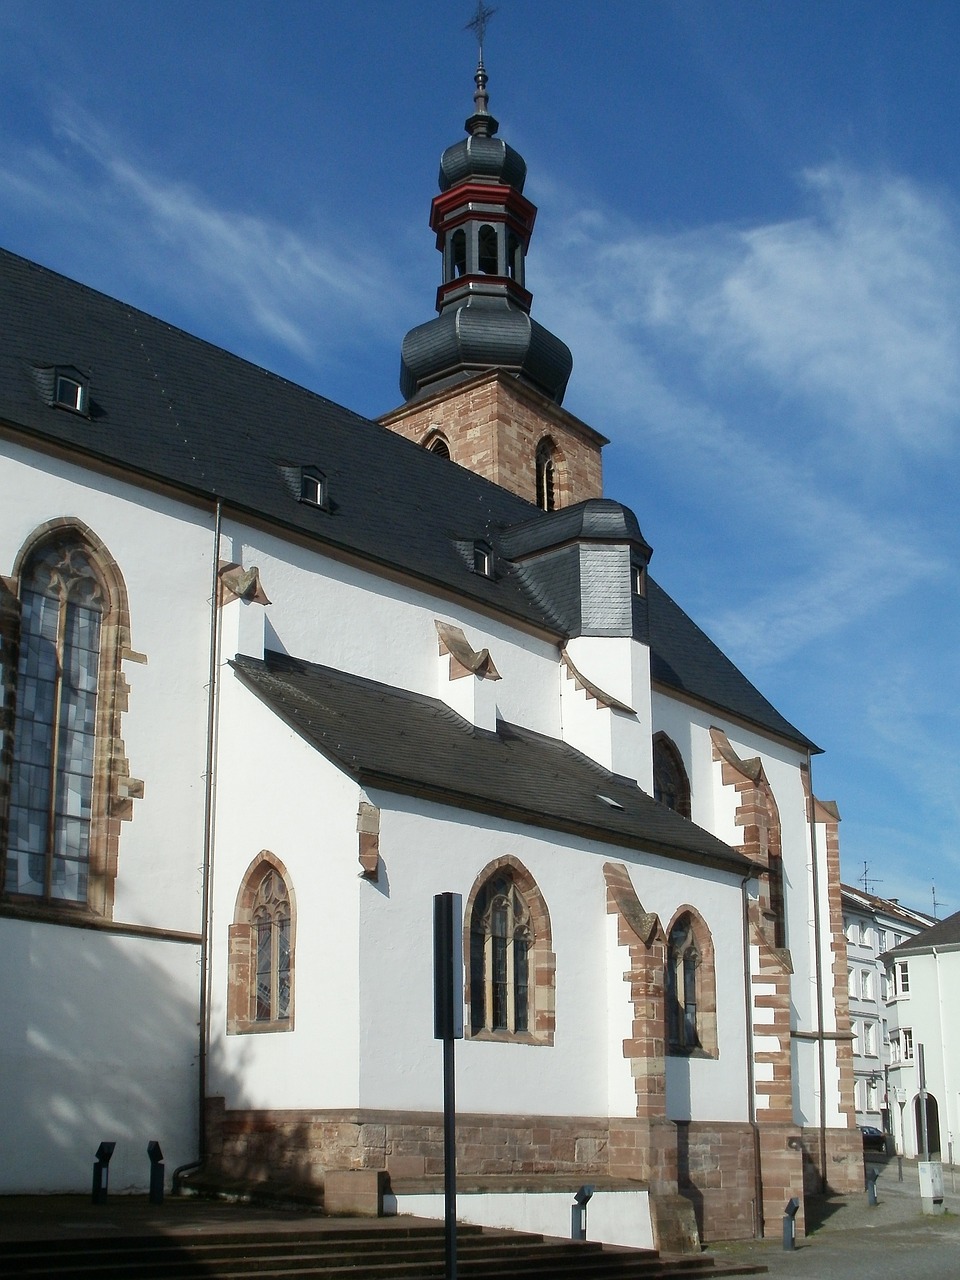 Bažnyčia, Saarbrucken, Schlosskirche, Architektūra, Vokietija, Europa, Pastatas, Katedra, Fasadas, Krikščionybė